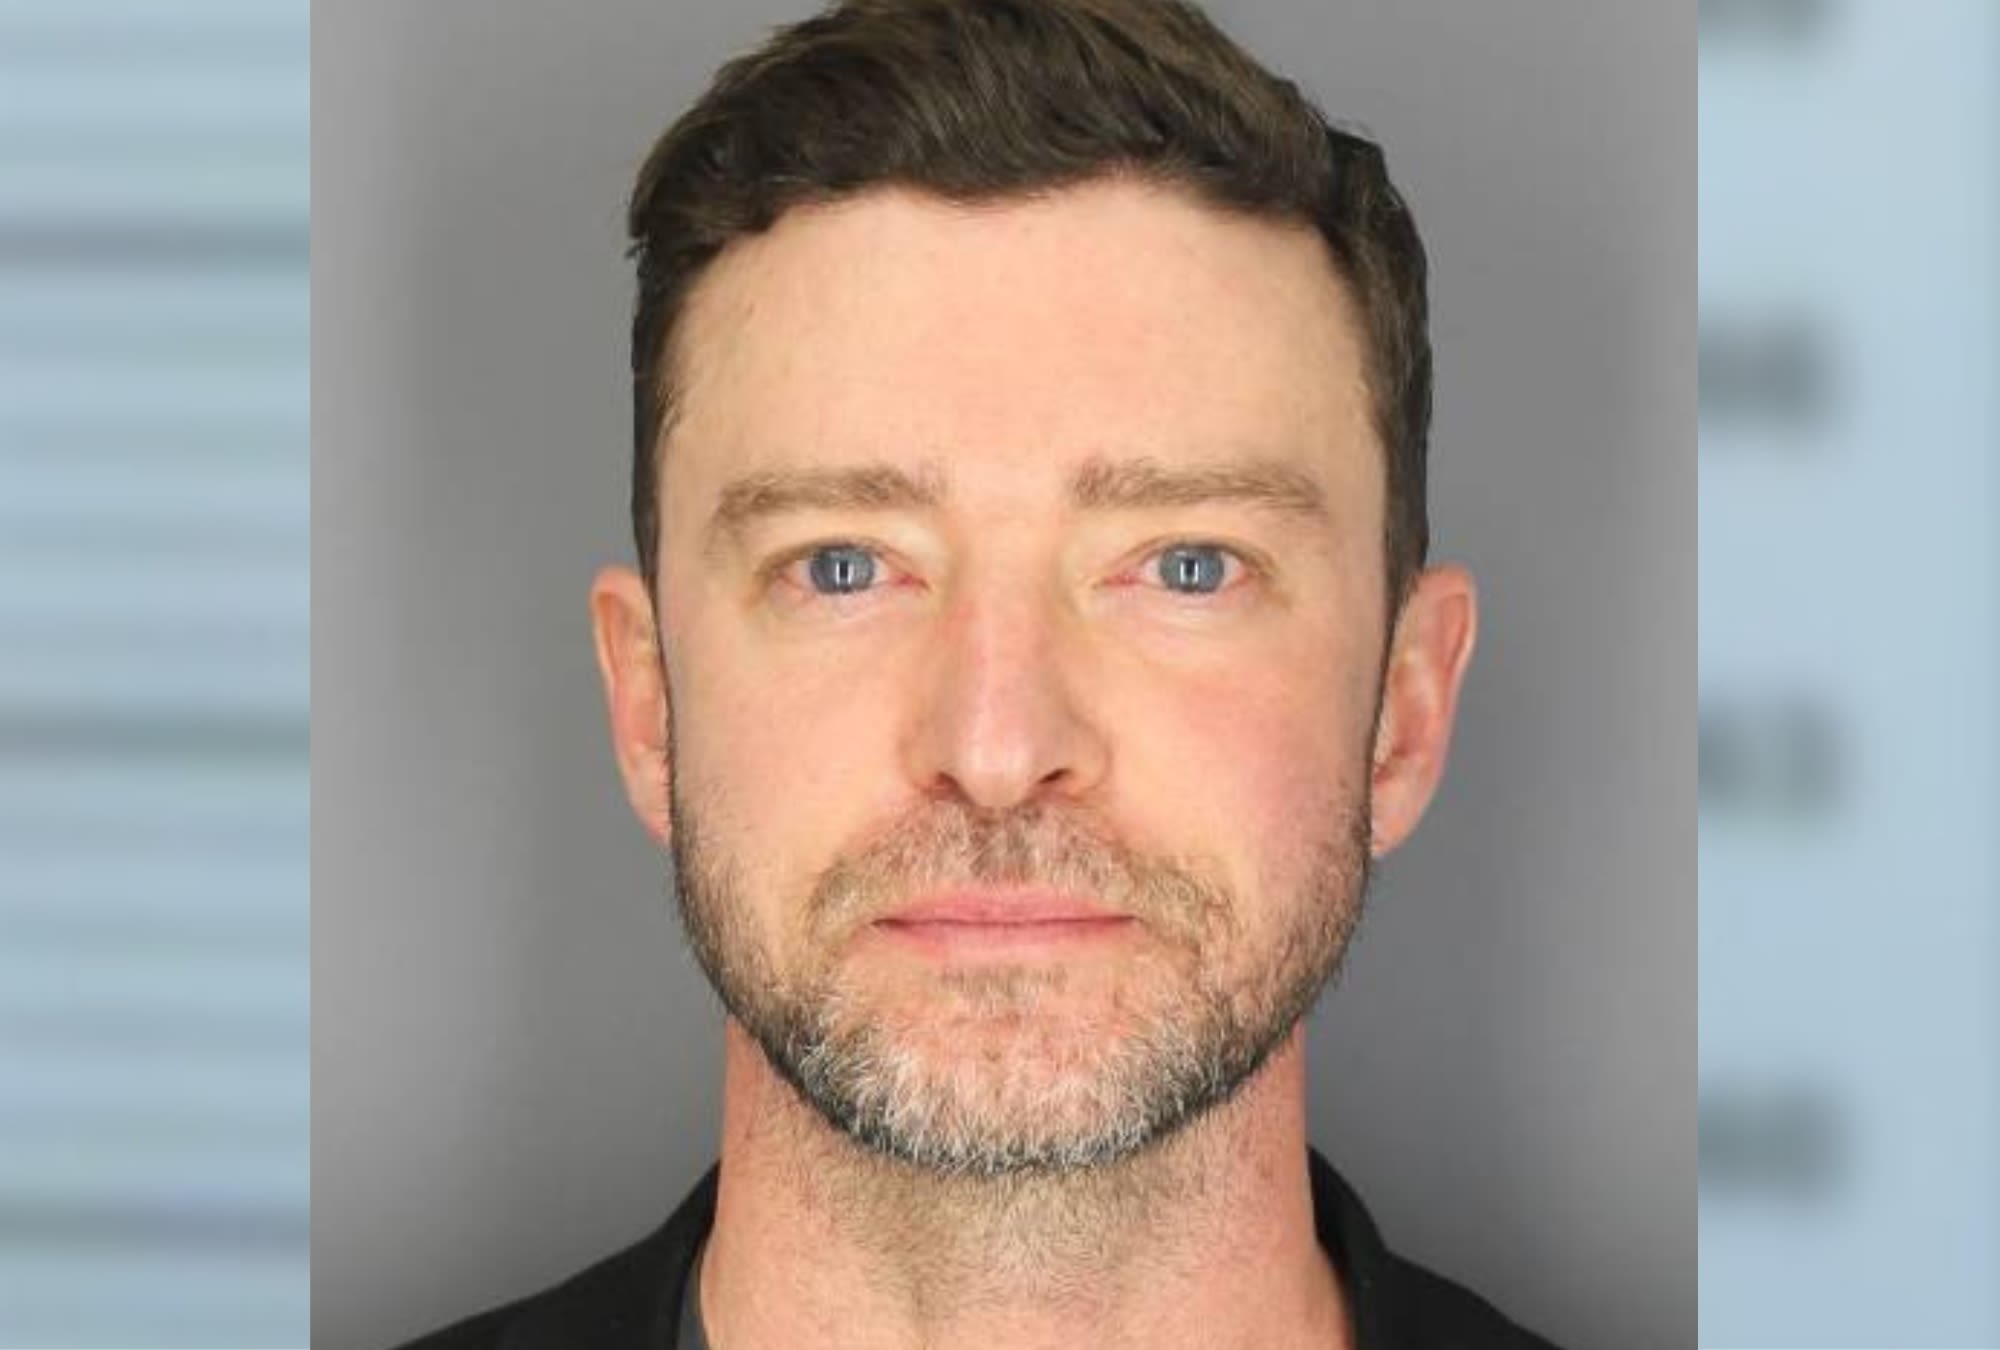 Justin Timberlake mugshot released: More details about star's DUI arrest